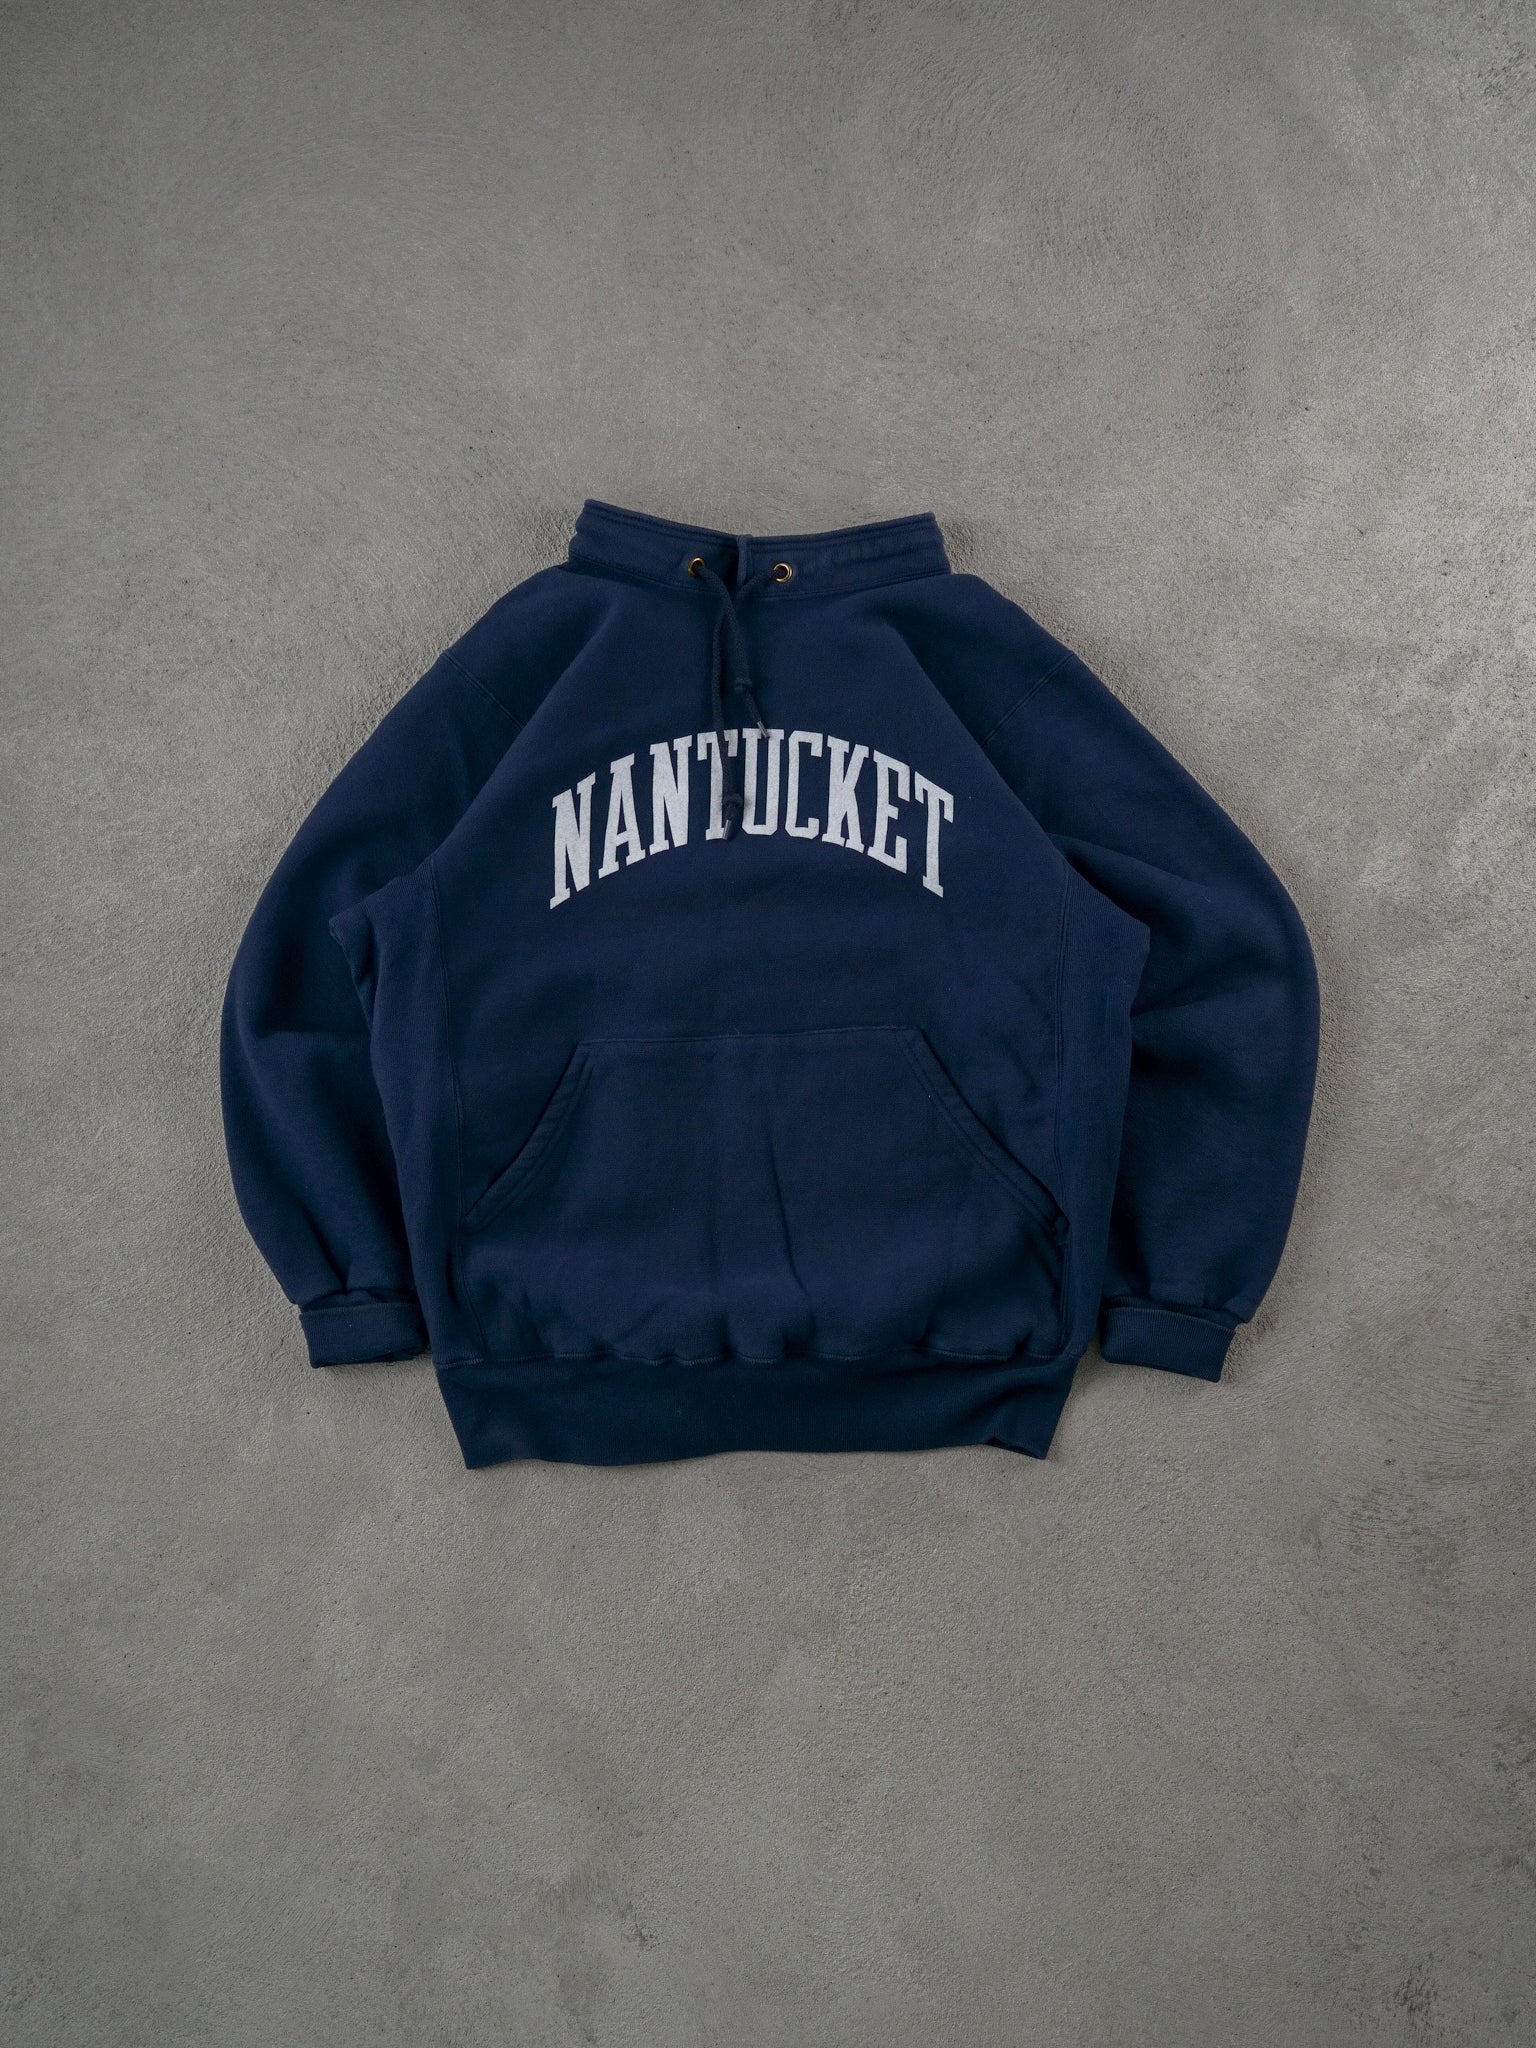 Vintage 90s Navy Blue Nantucket Collared Crewneck (L)